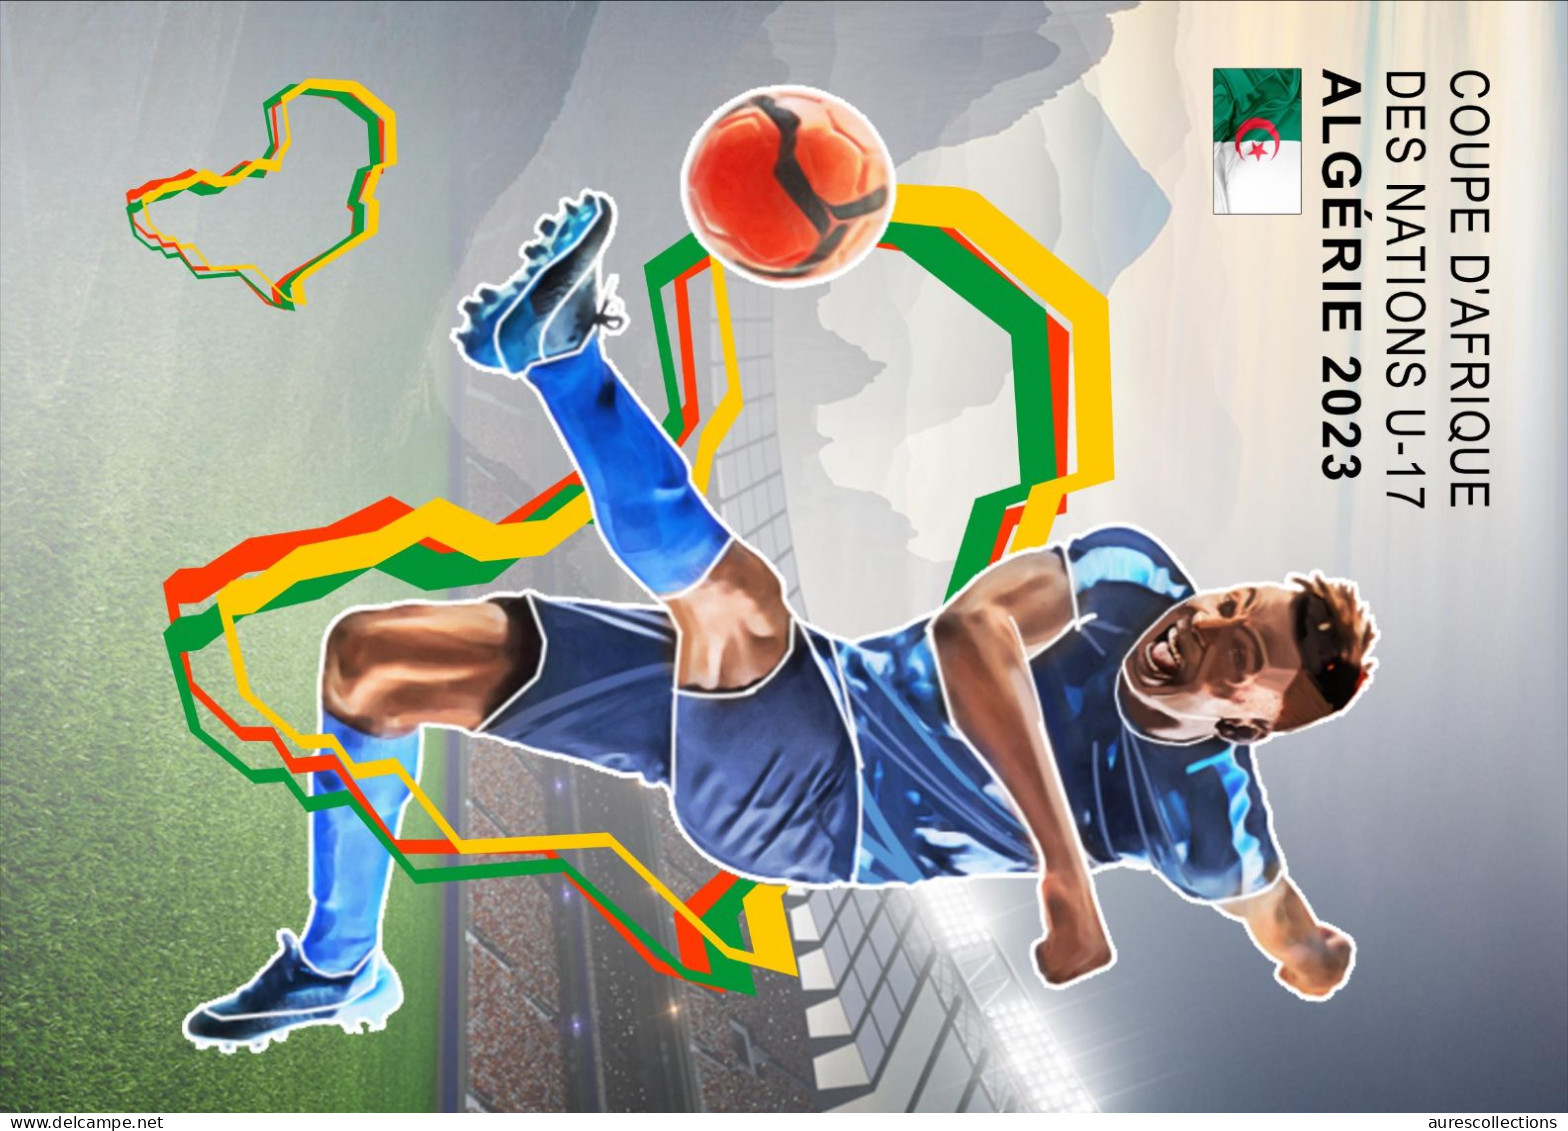 CENTRAL AFRICAN 2023 - STATIONERY CARD - FOOTBALL AFRICA CUP OF NATIONS ALGERIA ALGERIE COUPE D' AFRIQUE HOGGAR - Fußball-Afrikameisterschaft